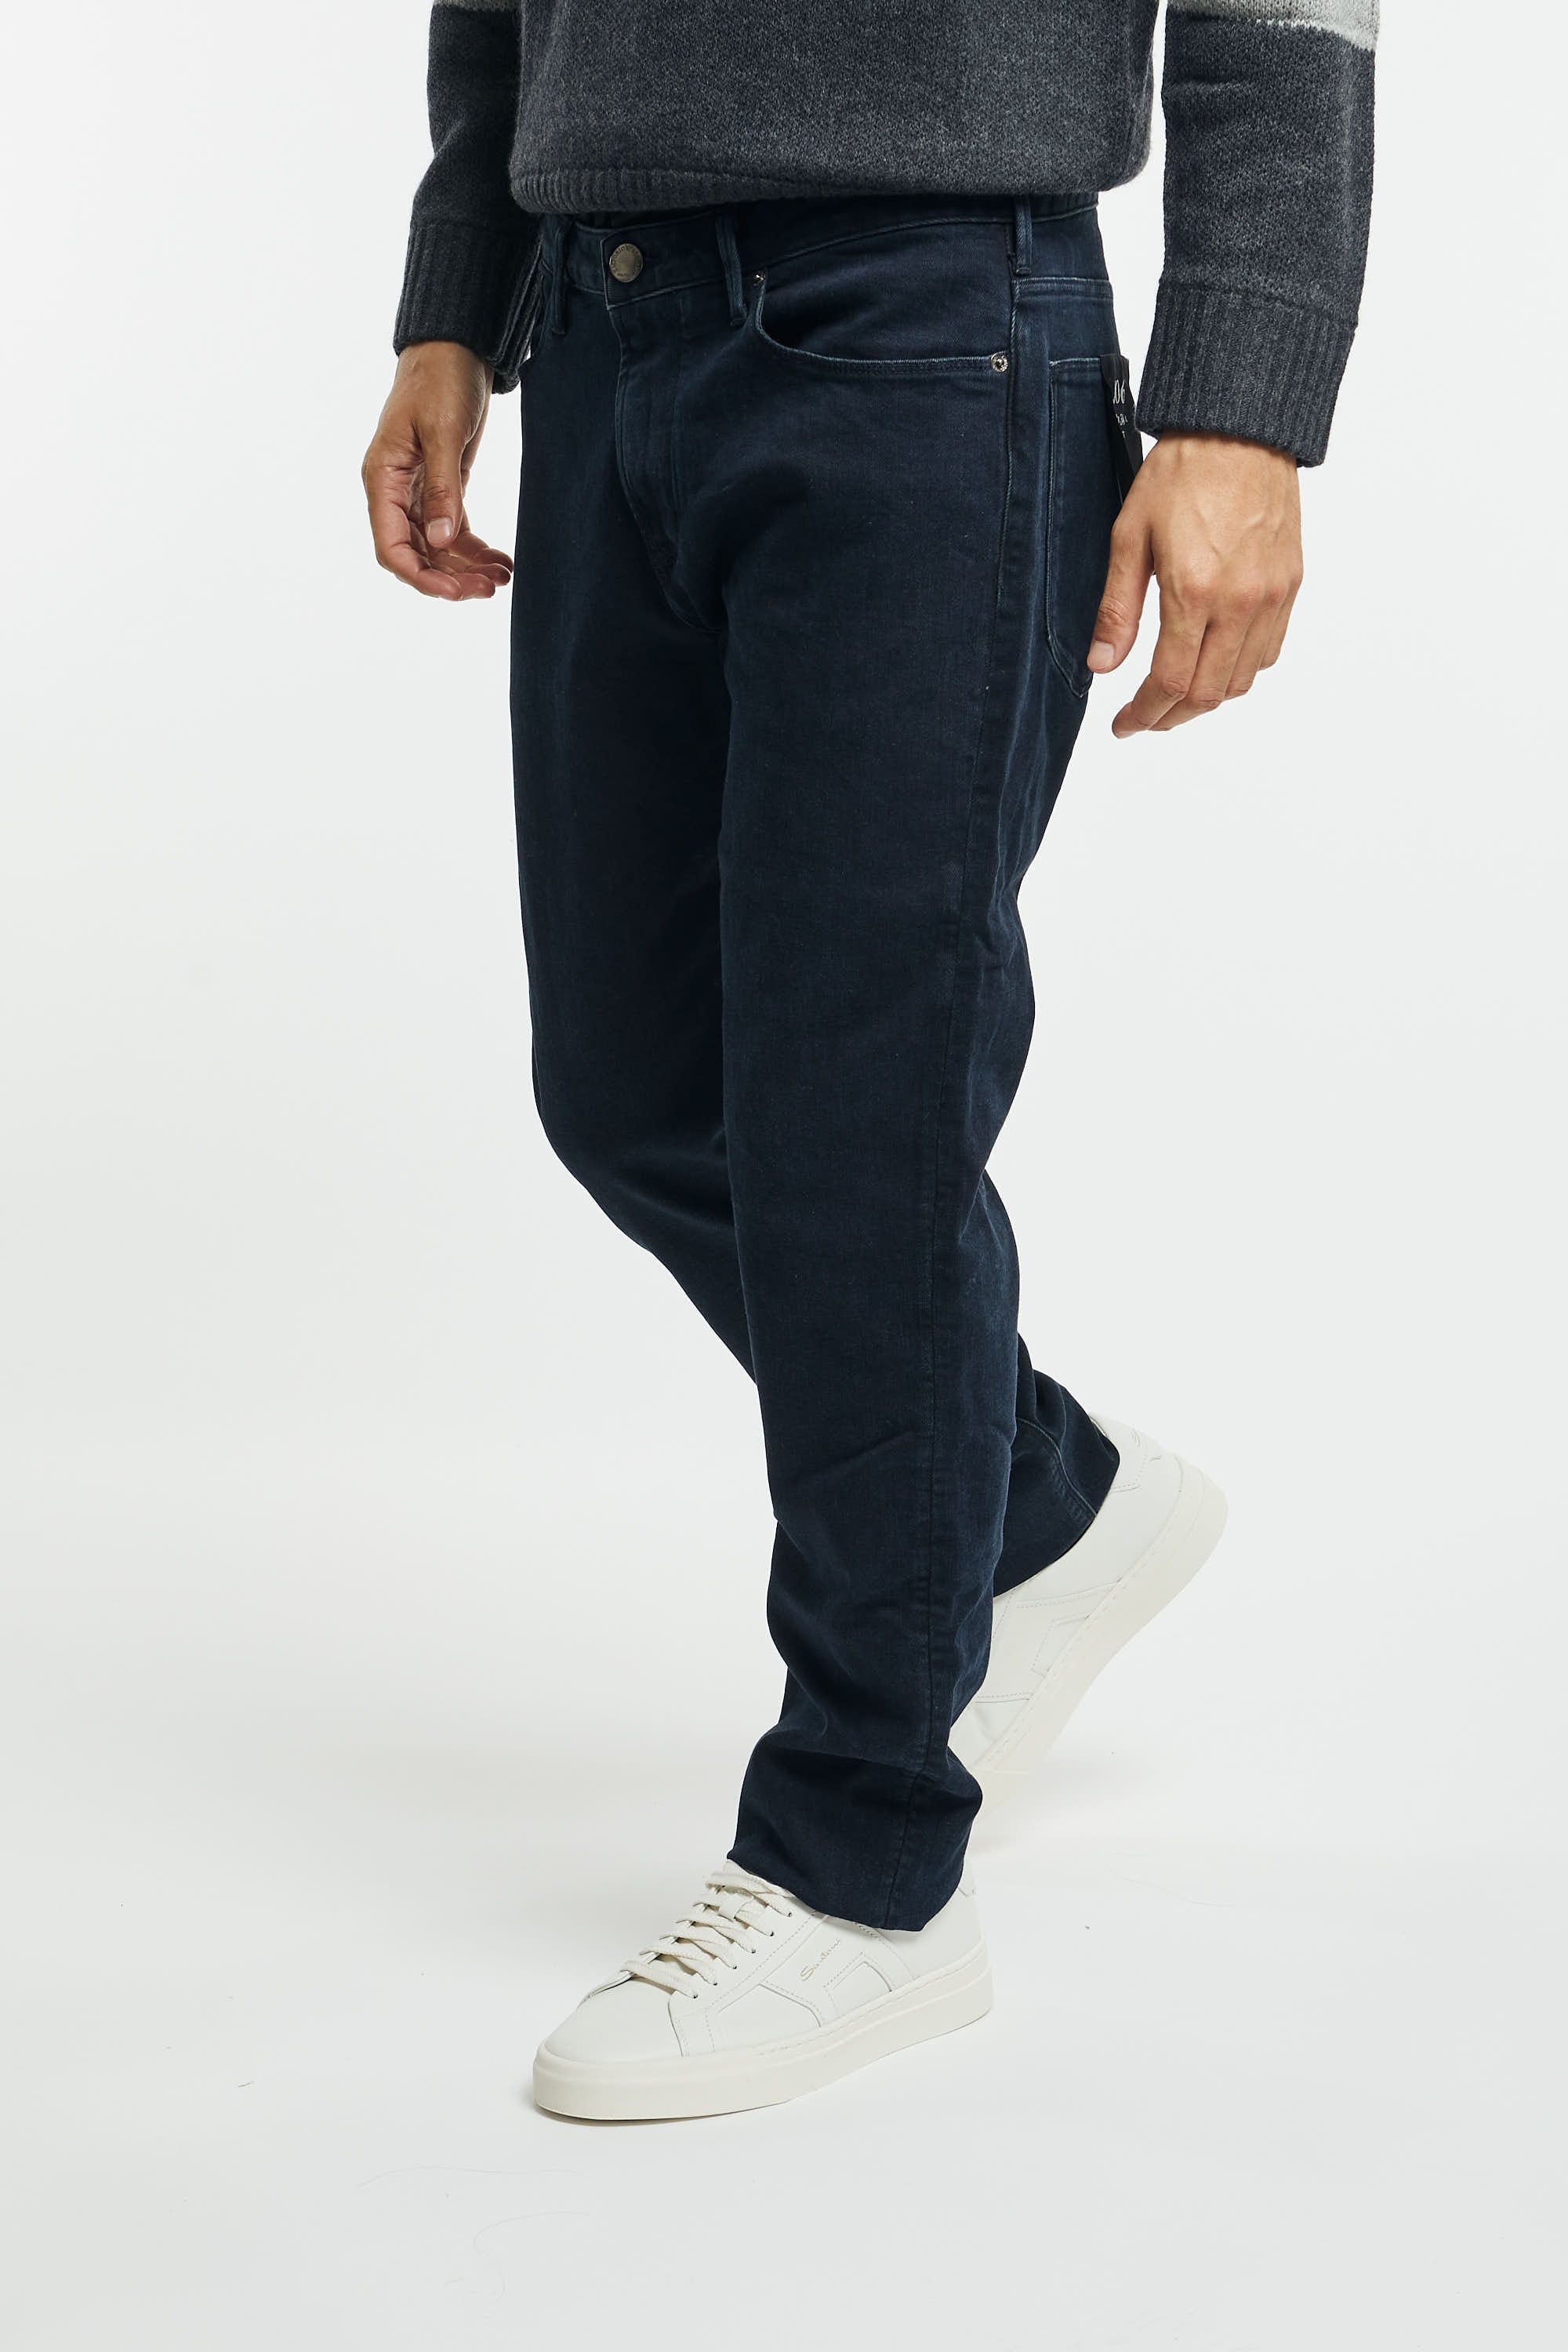 Emporio Armani Jeans J06 Slim Fit in Denim aus Stretch-Baumwolle Blau-1